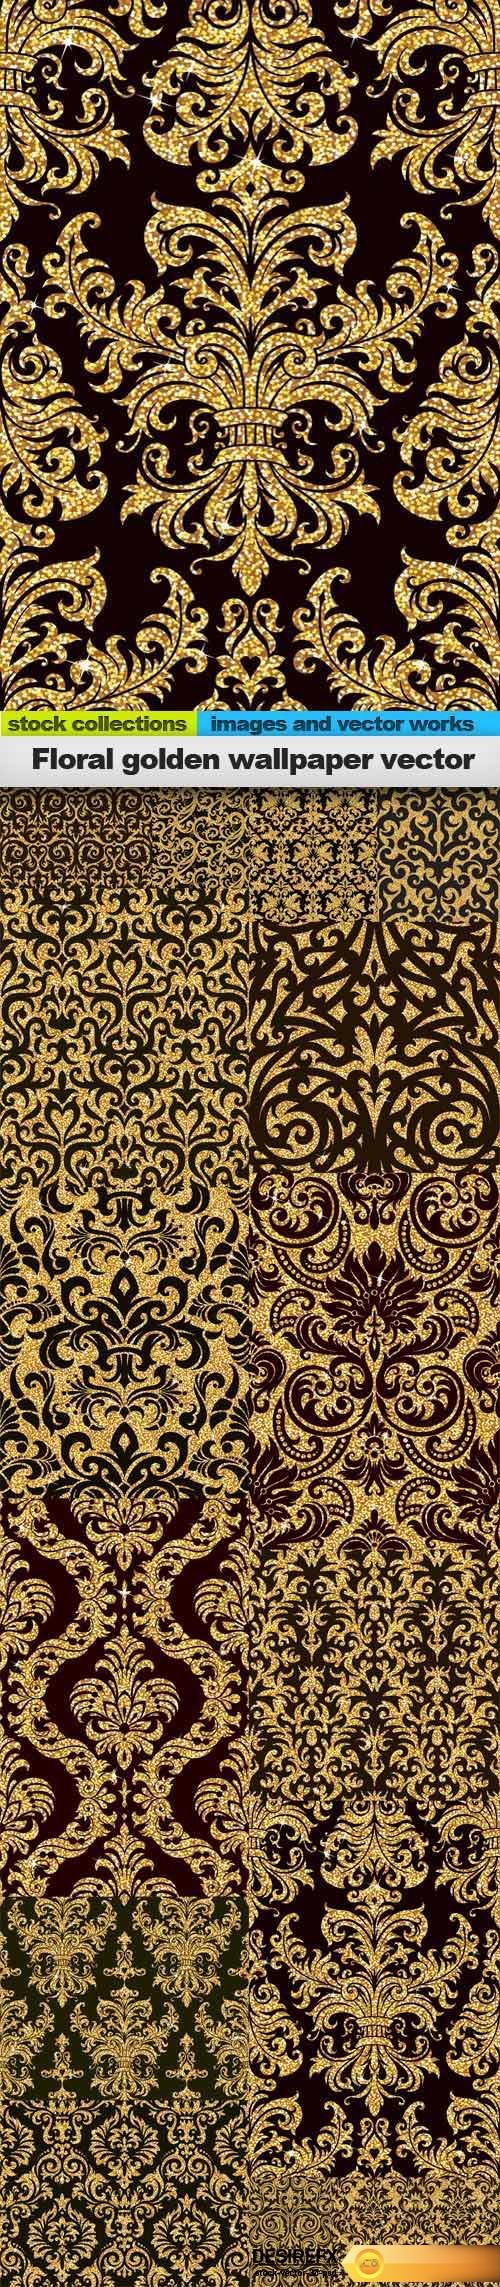 Floral golden wallpaper vector, 15 x EPS